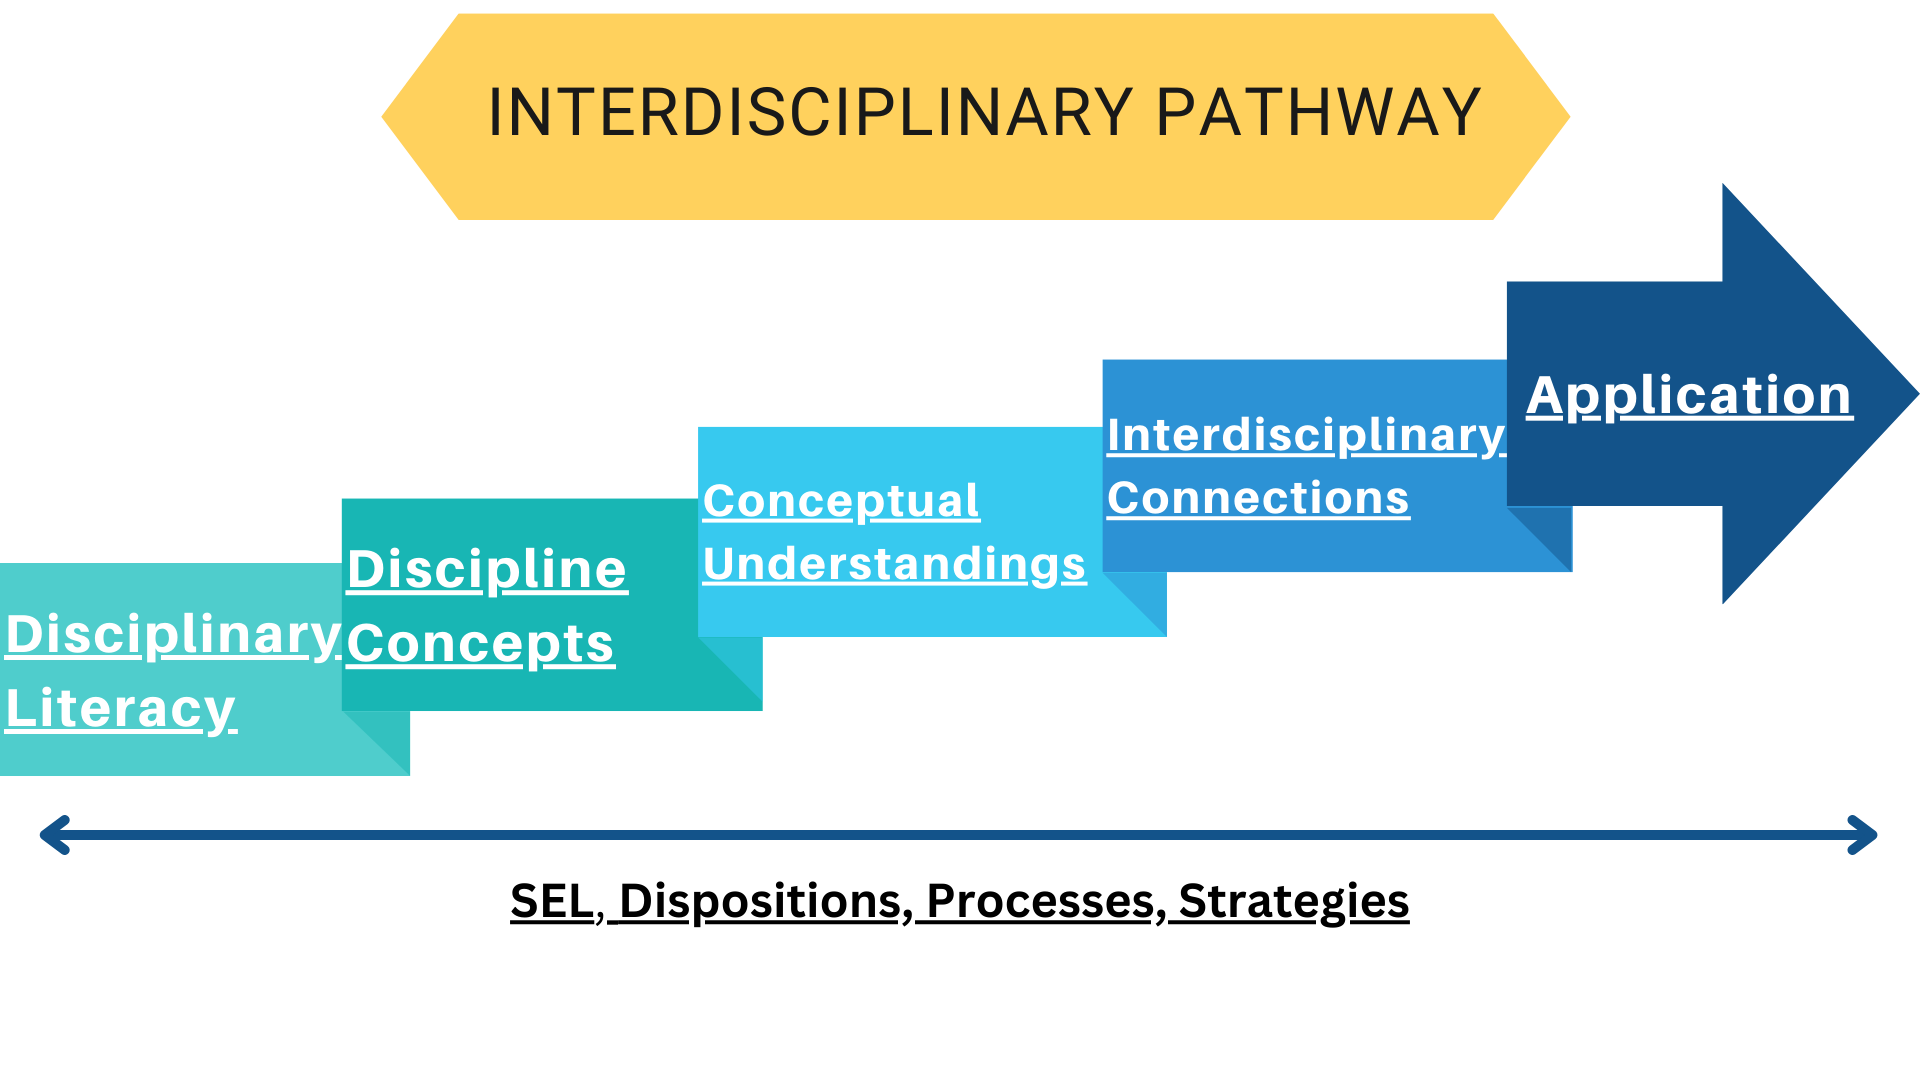 The Interdisciplinary progression